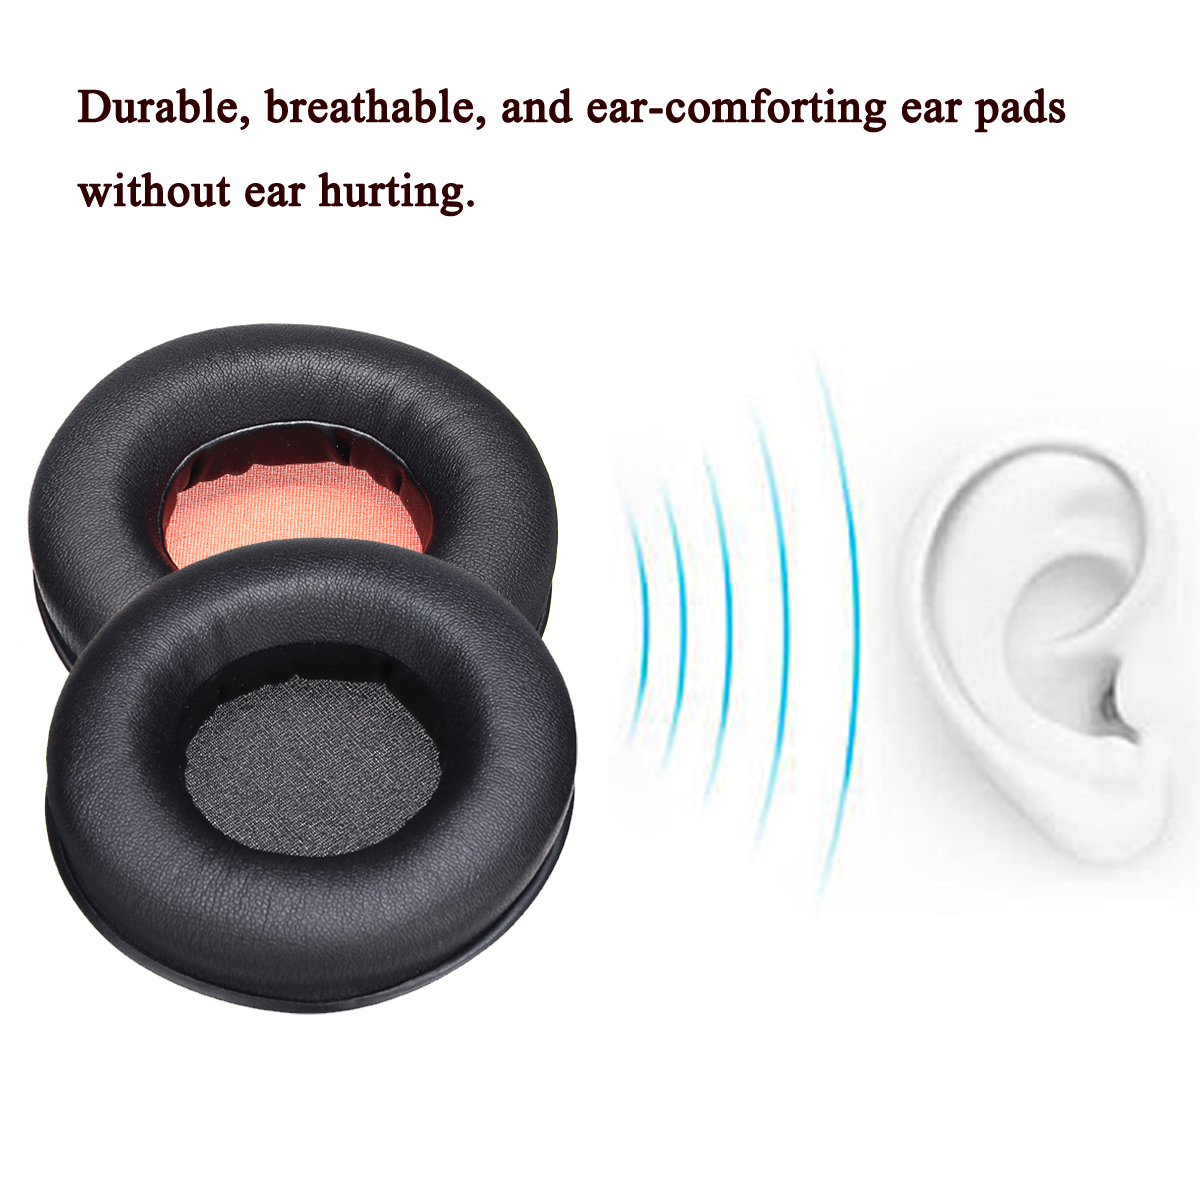 1-Pair-Replacement-Ear-Cushion-Earpads-Headphone-Cover-for-Razer-Kraken-Pro-Gaming-Headset-1356499